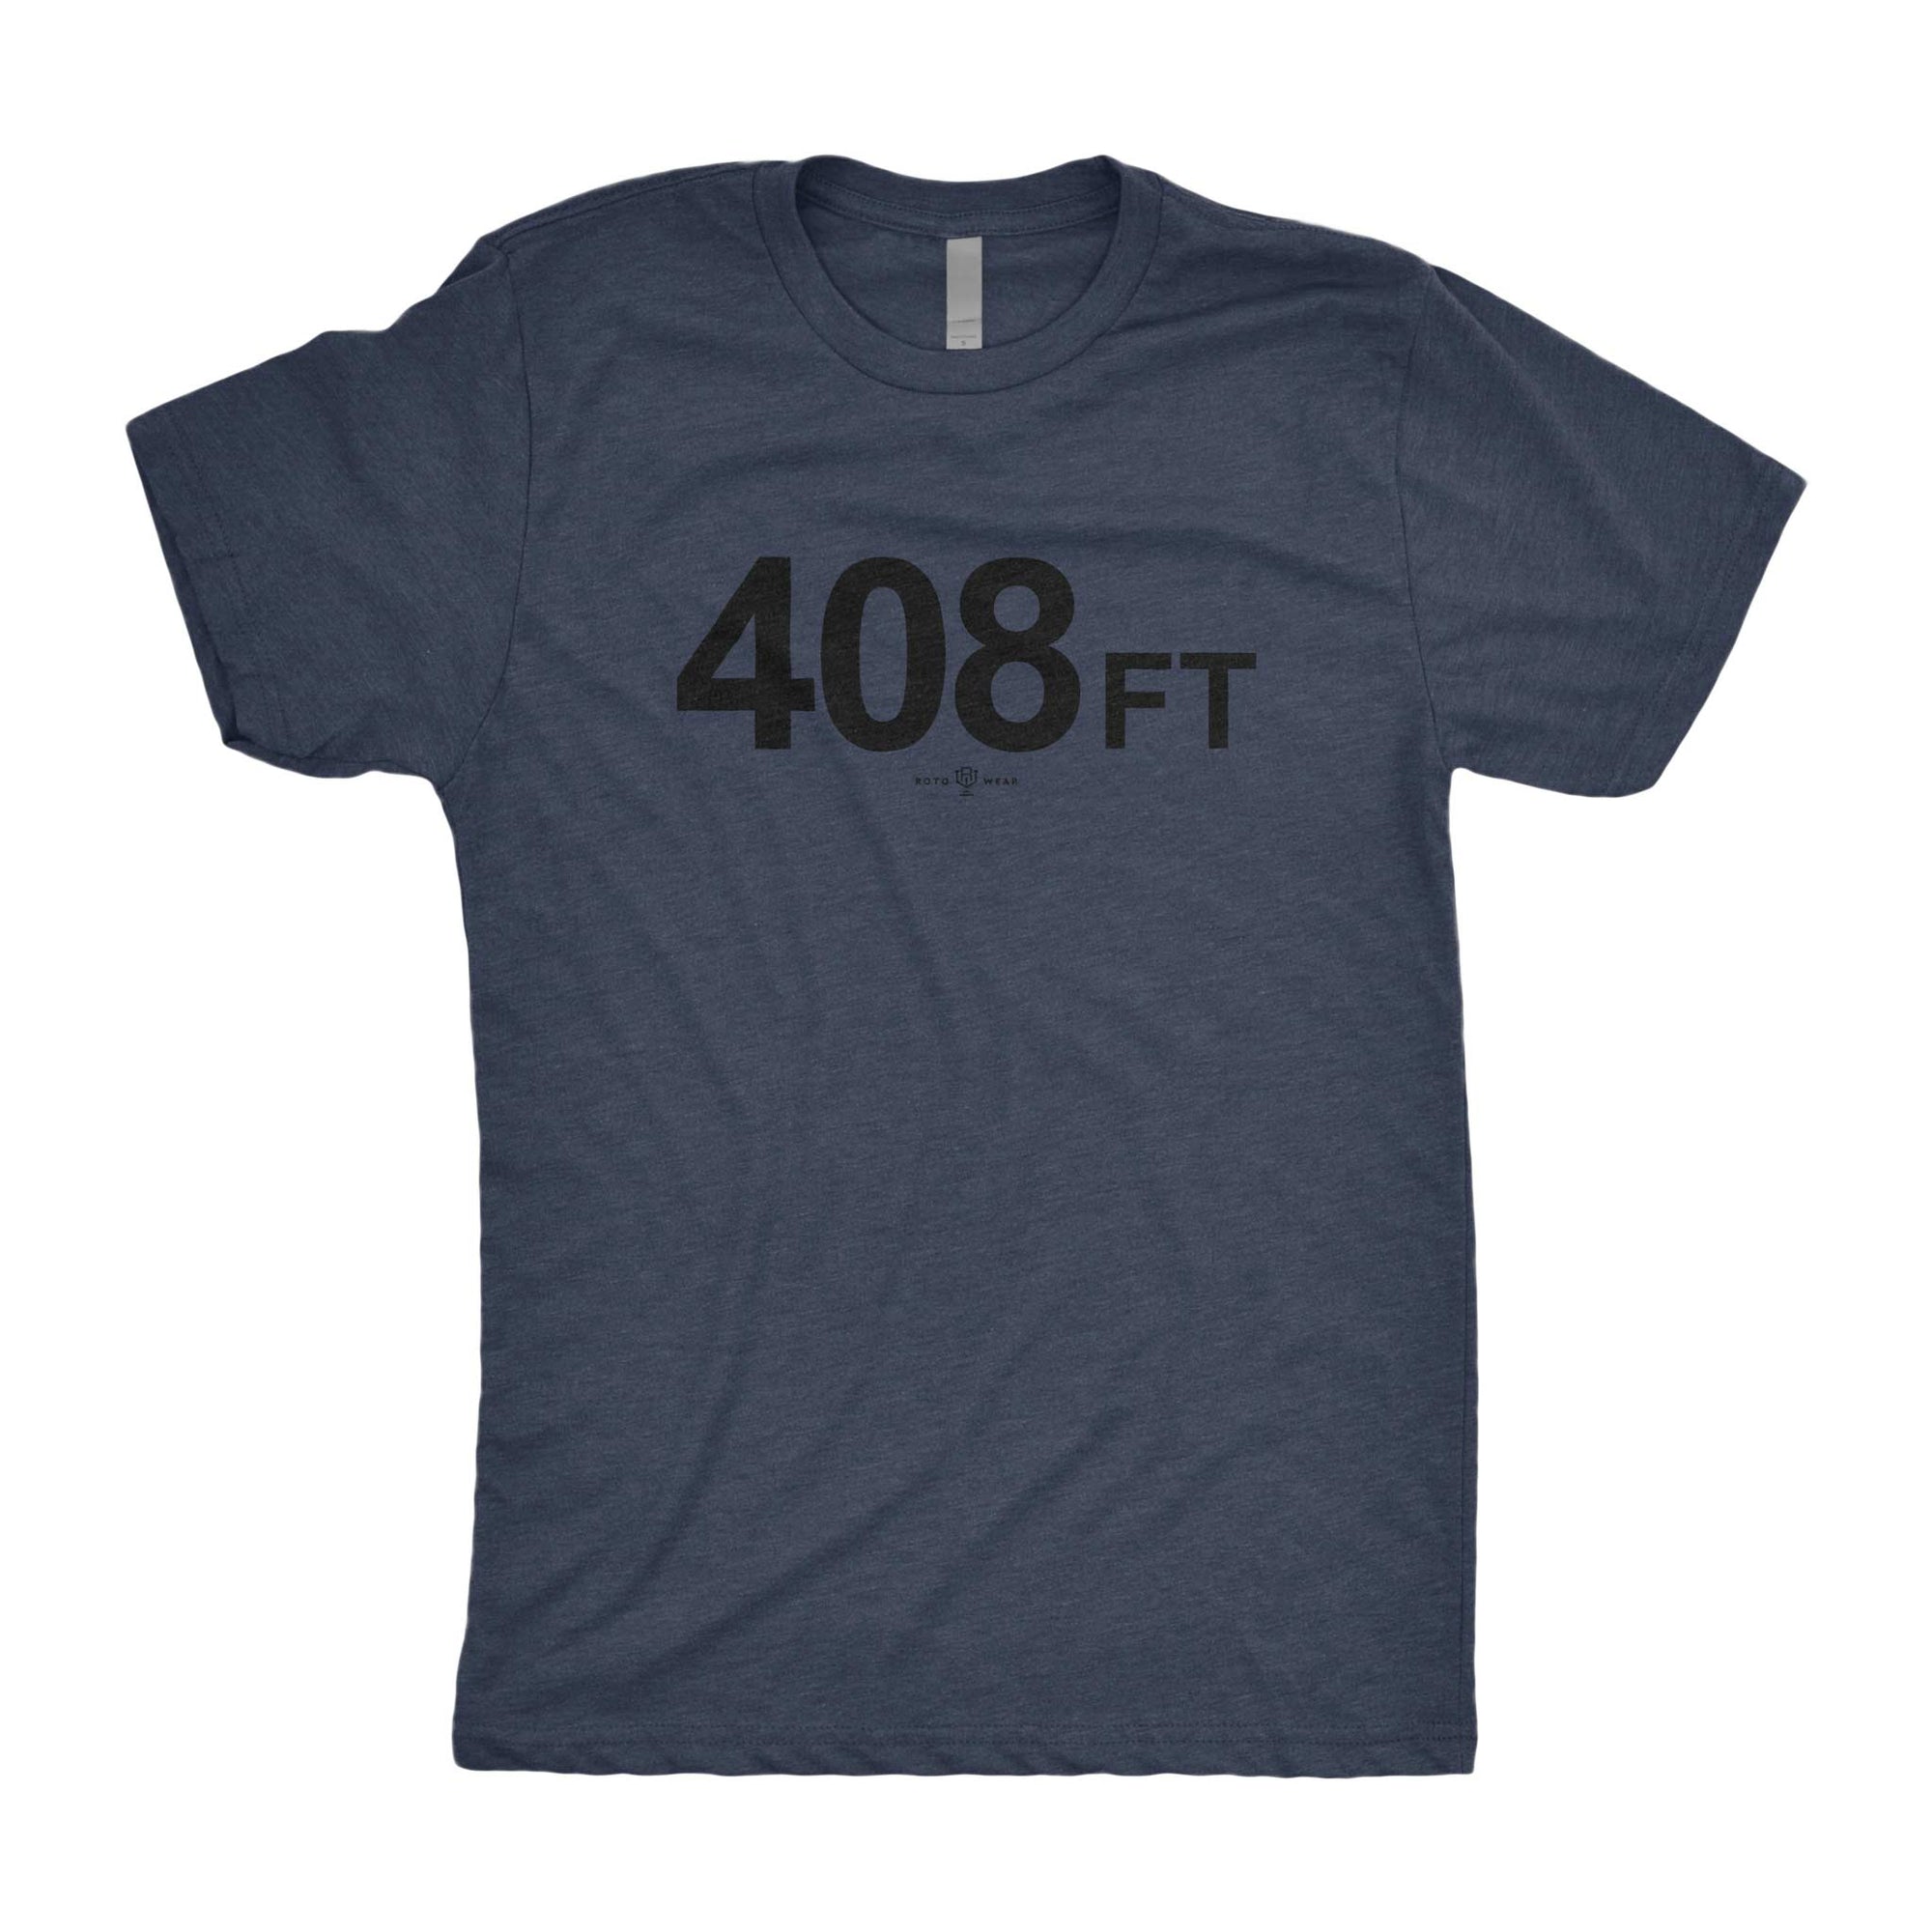 408 Ft. Center Field Yankee Stadium Shirt